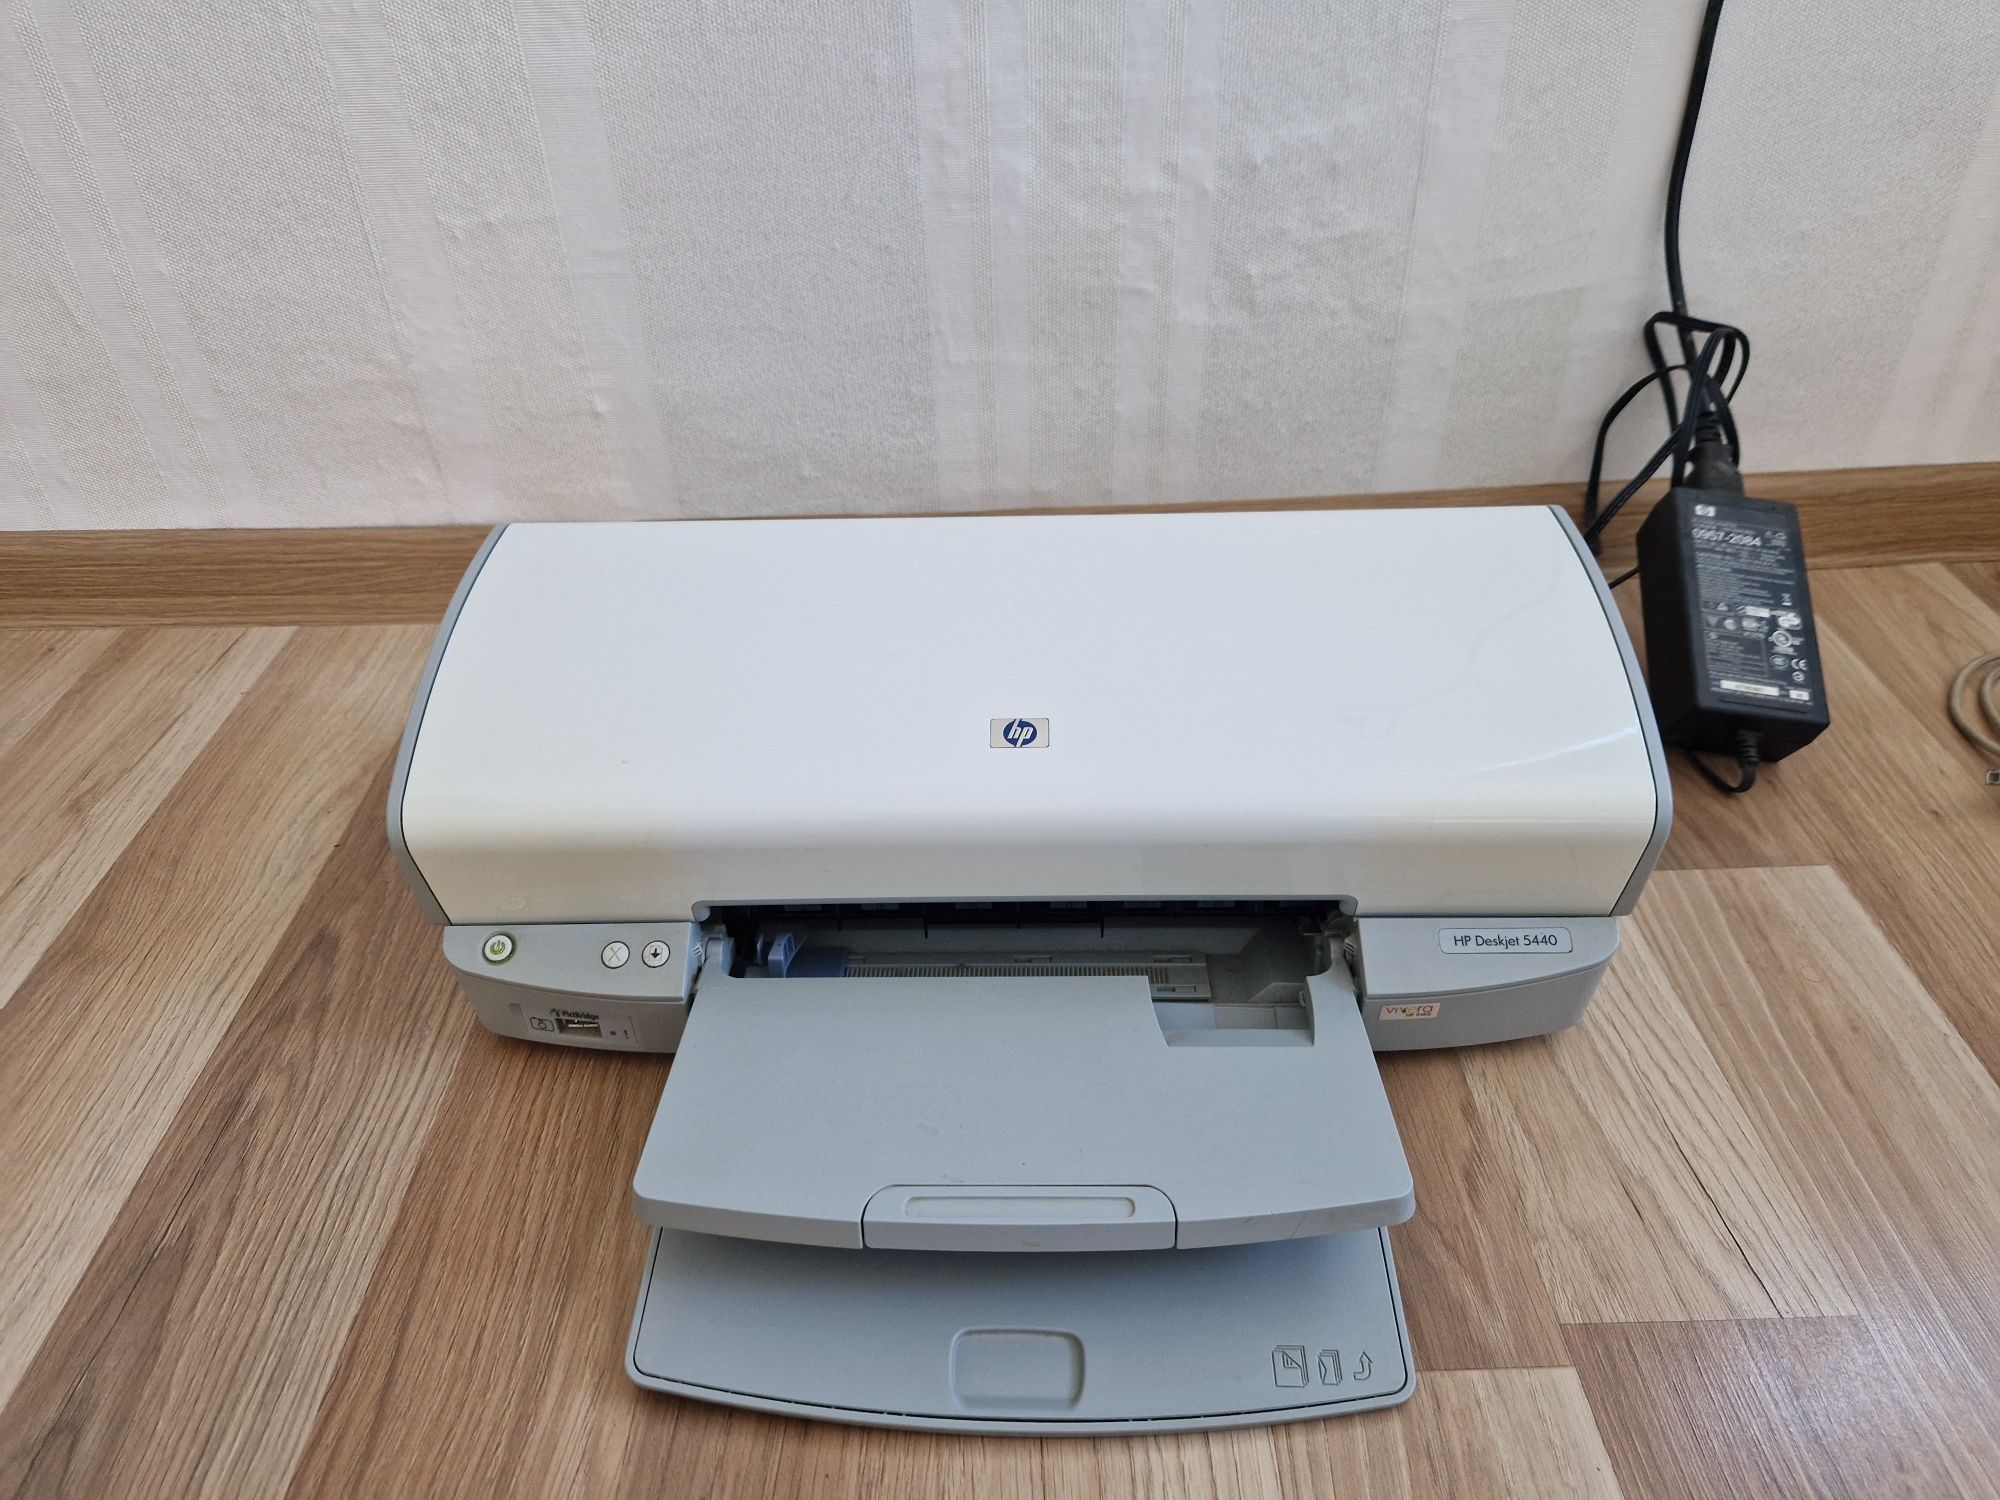 Принтер HP Deskjet 5440.